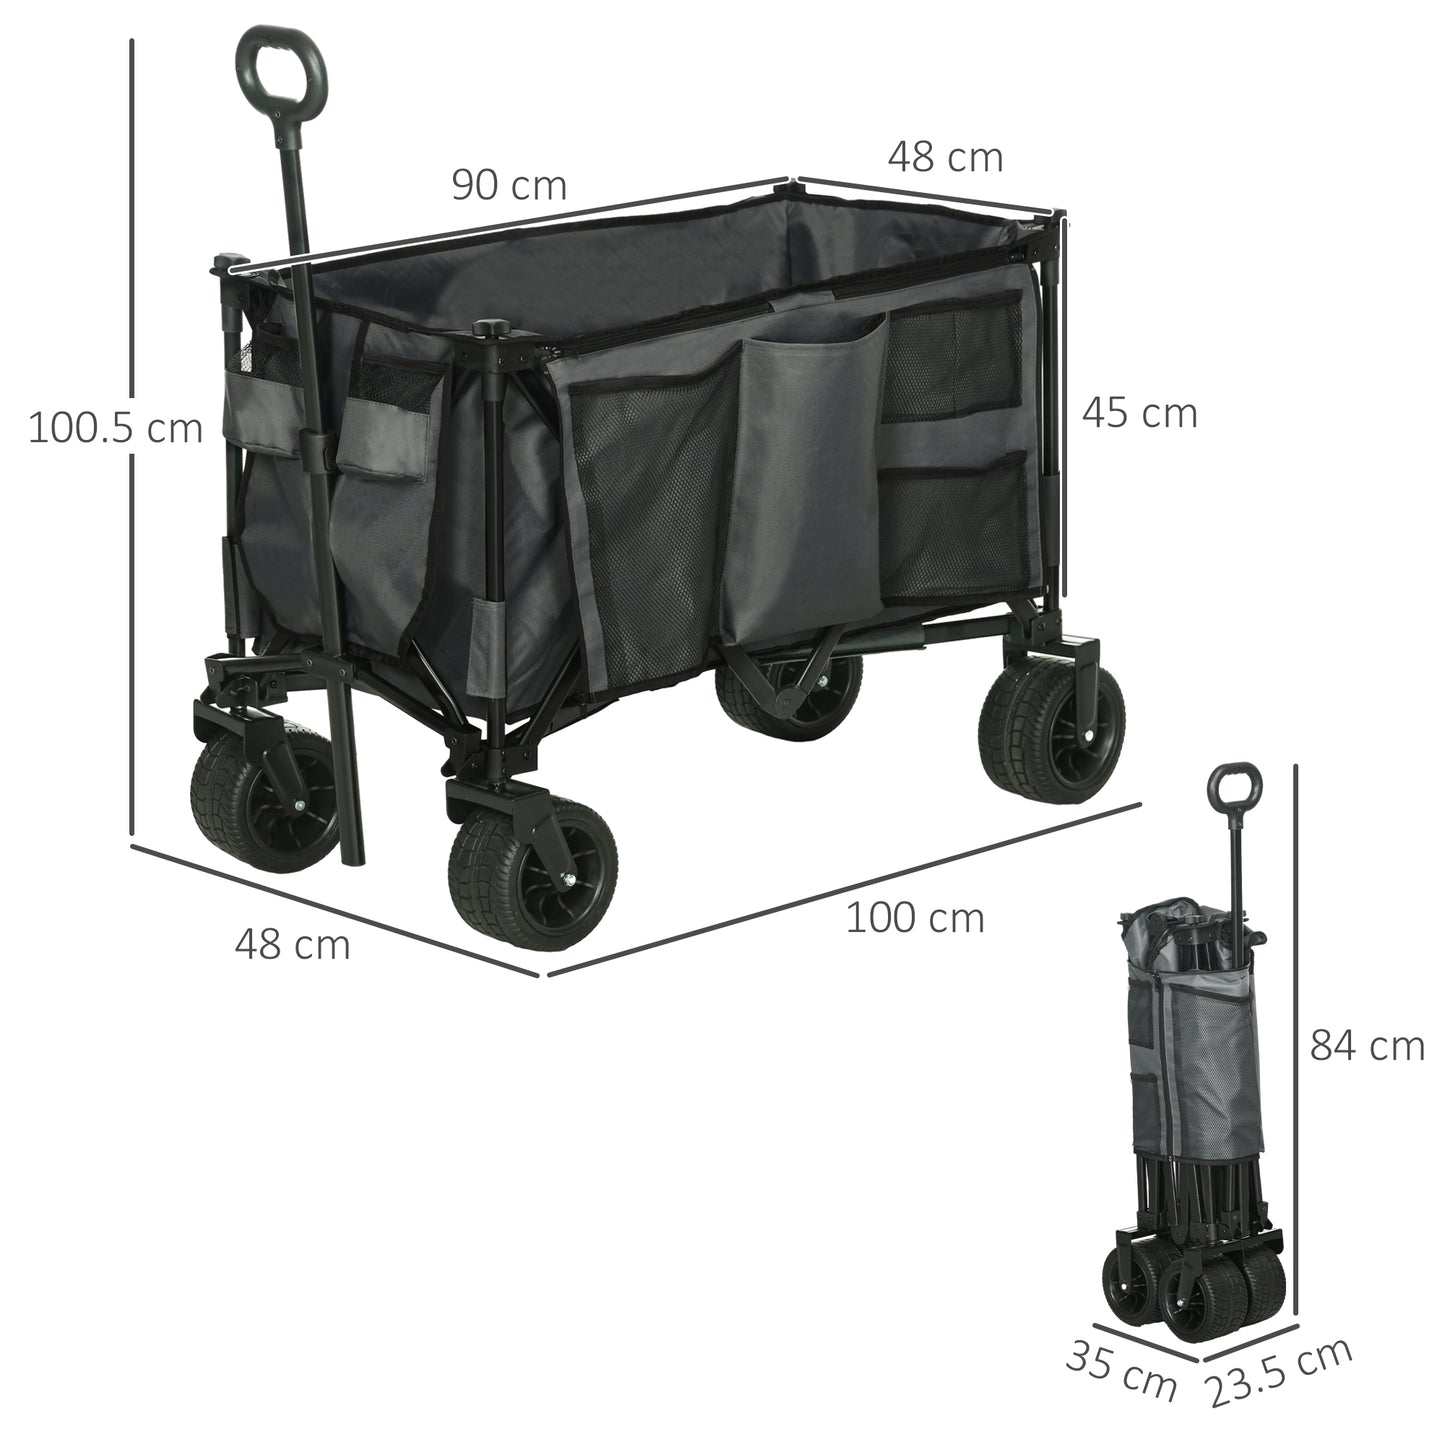 Outsunny Collapsible Outdoor Utility Wagon, Folding Garden Trolley Cart for Camping, Dark Grey